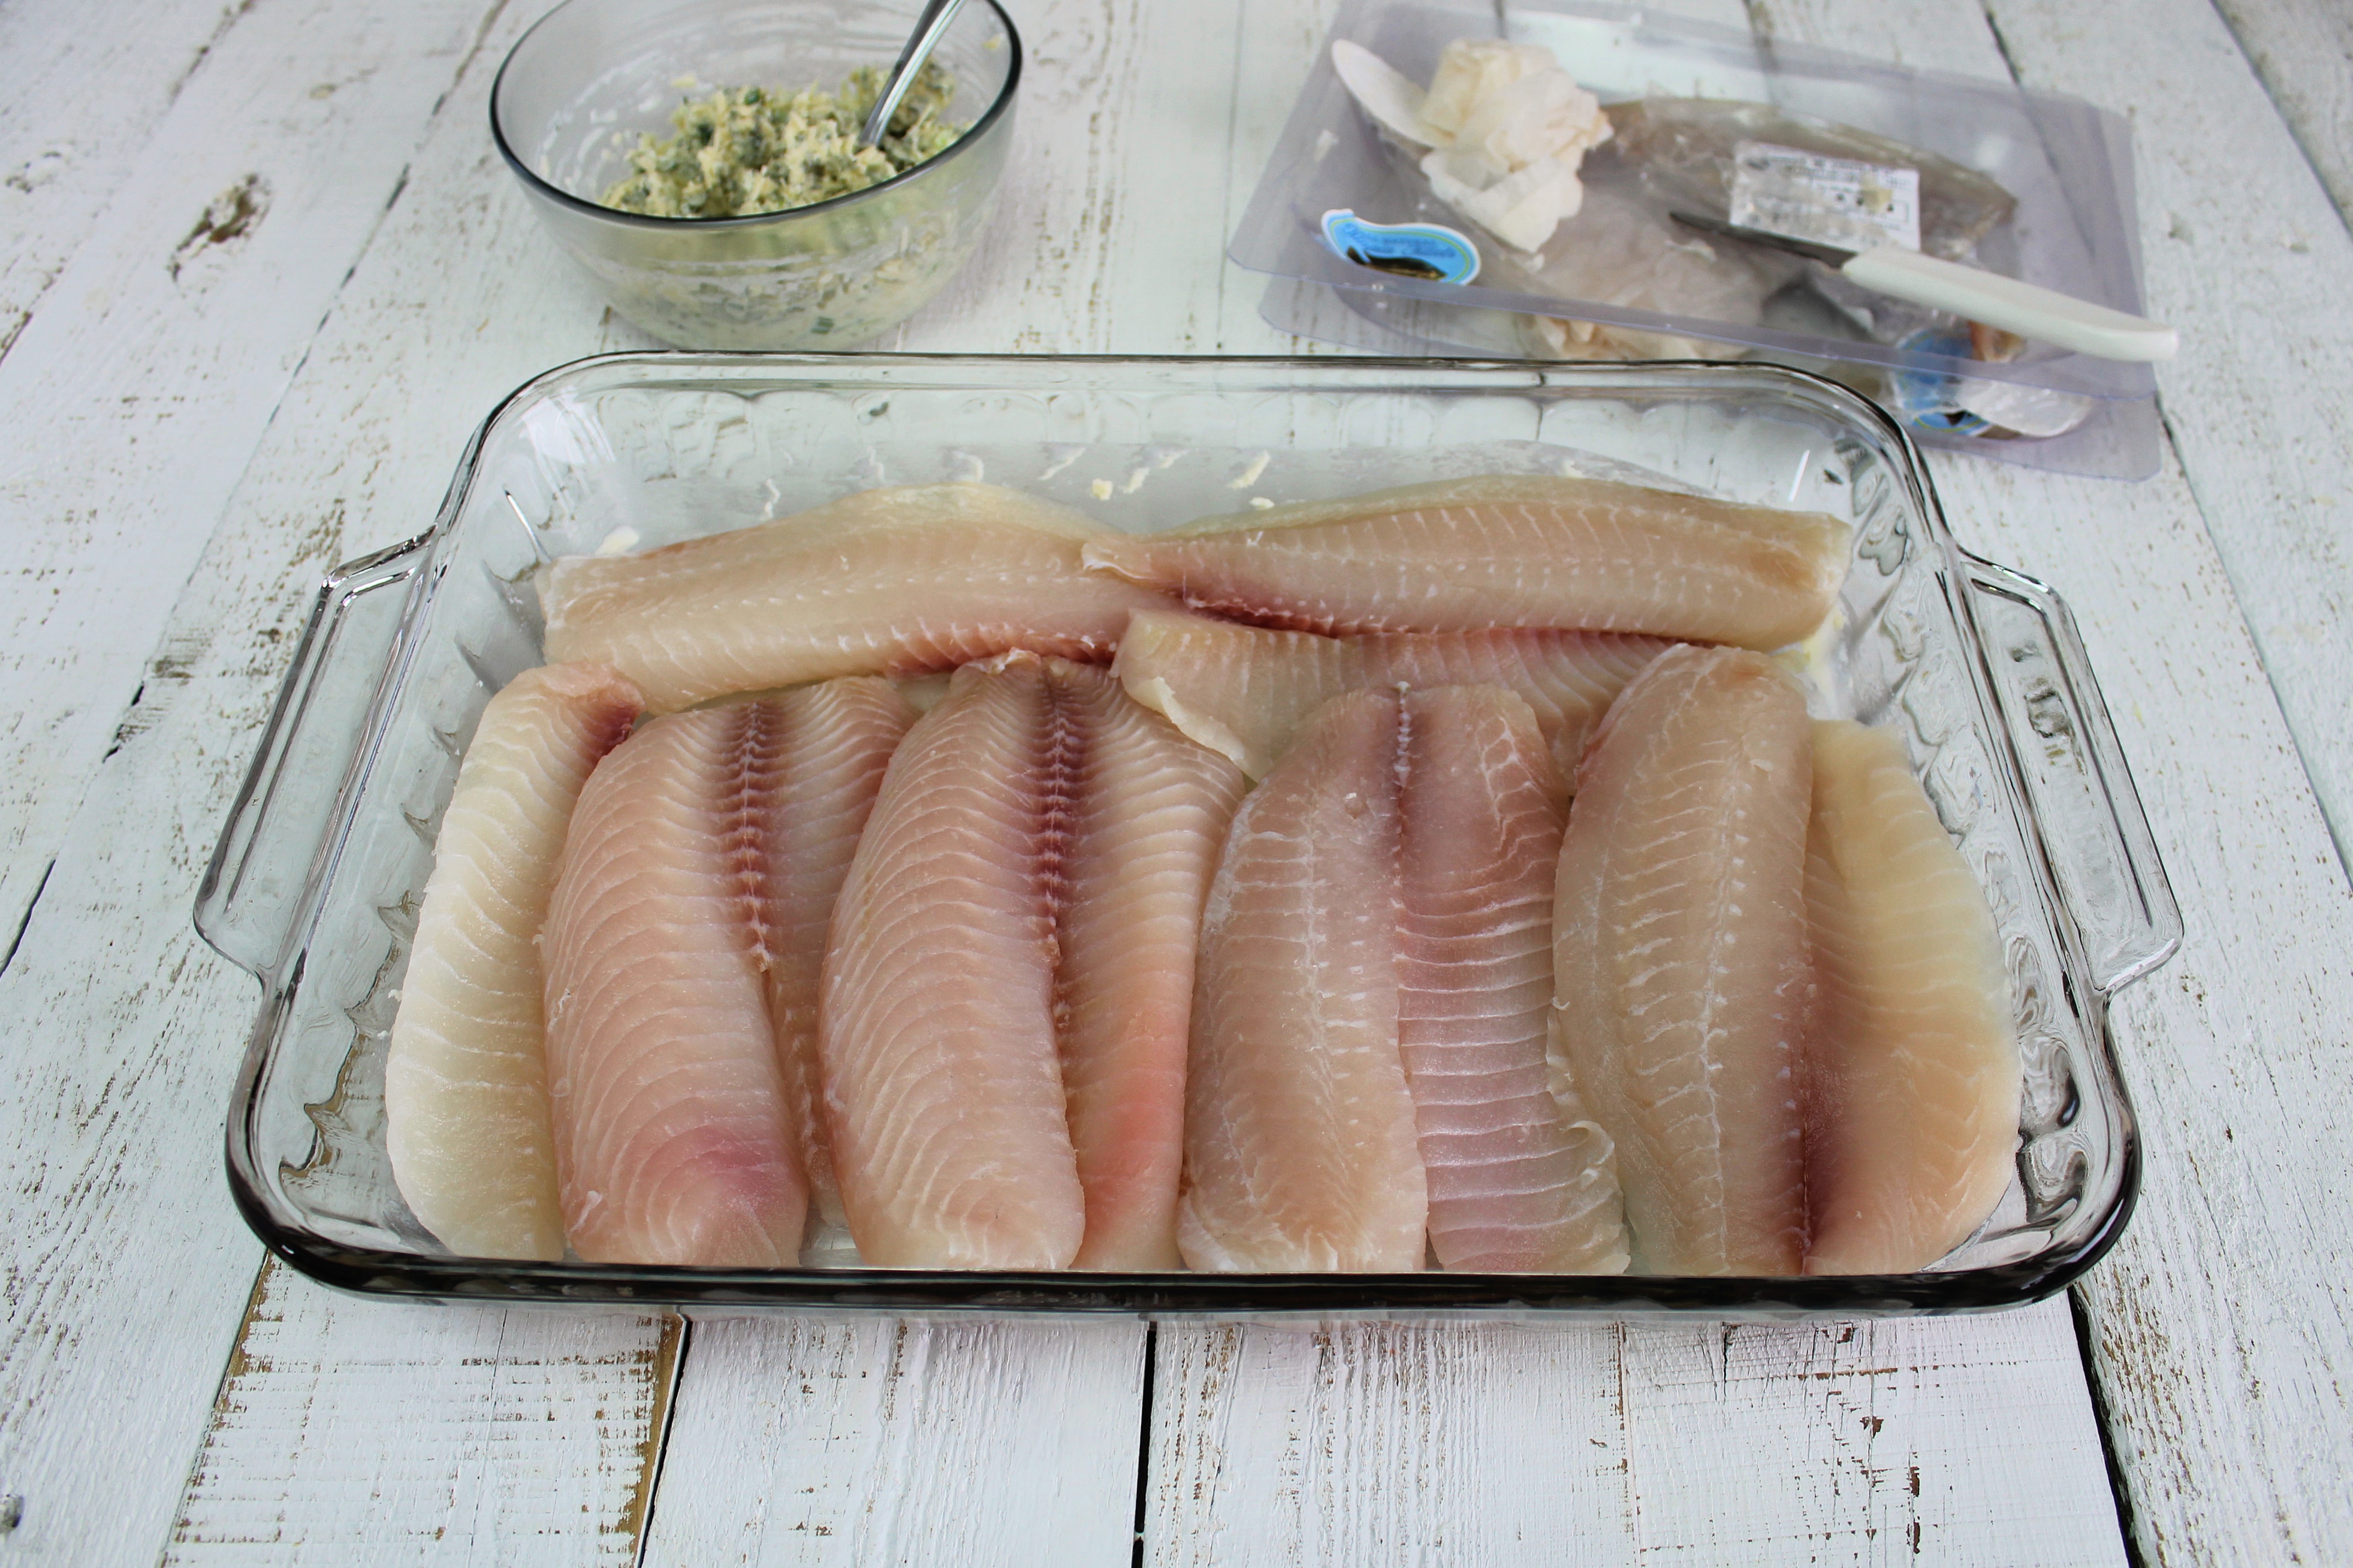 Arrange fish in a single layer in baking dish.